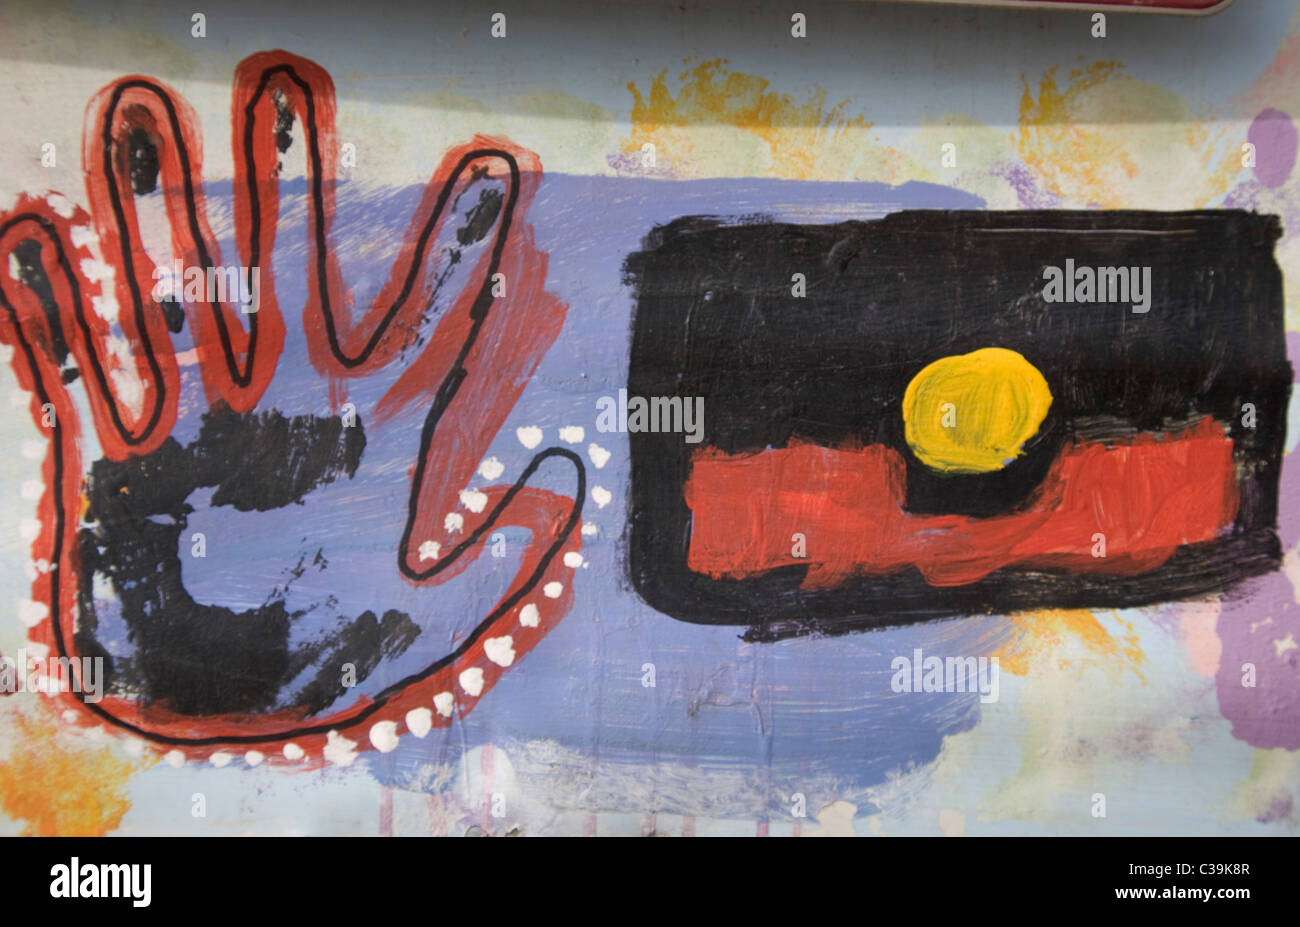 Painting of the Australian Aboriginal Flag in Adelaide Australia Stock Photo